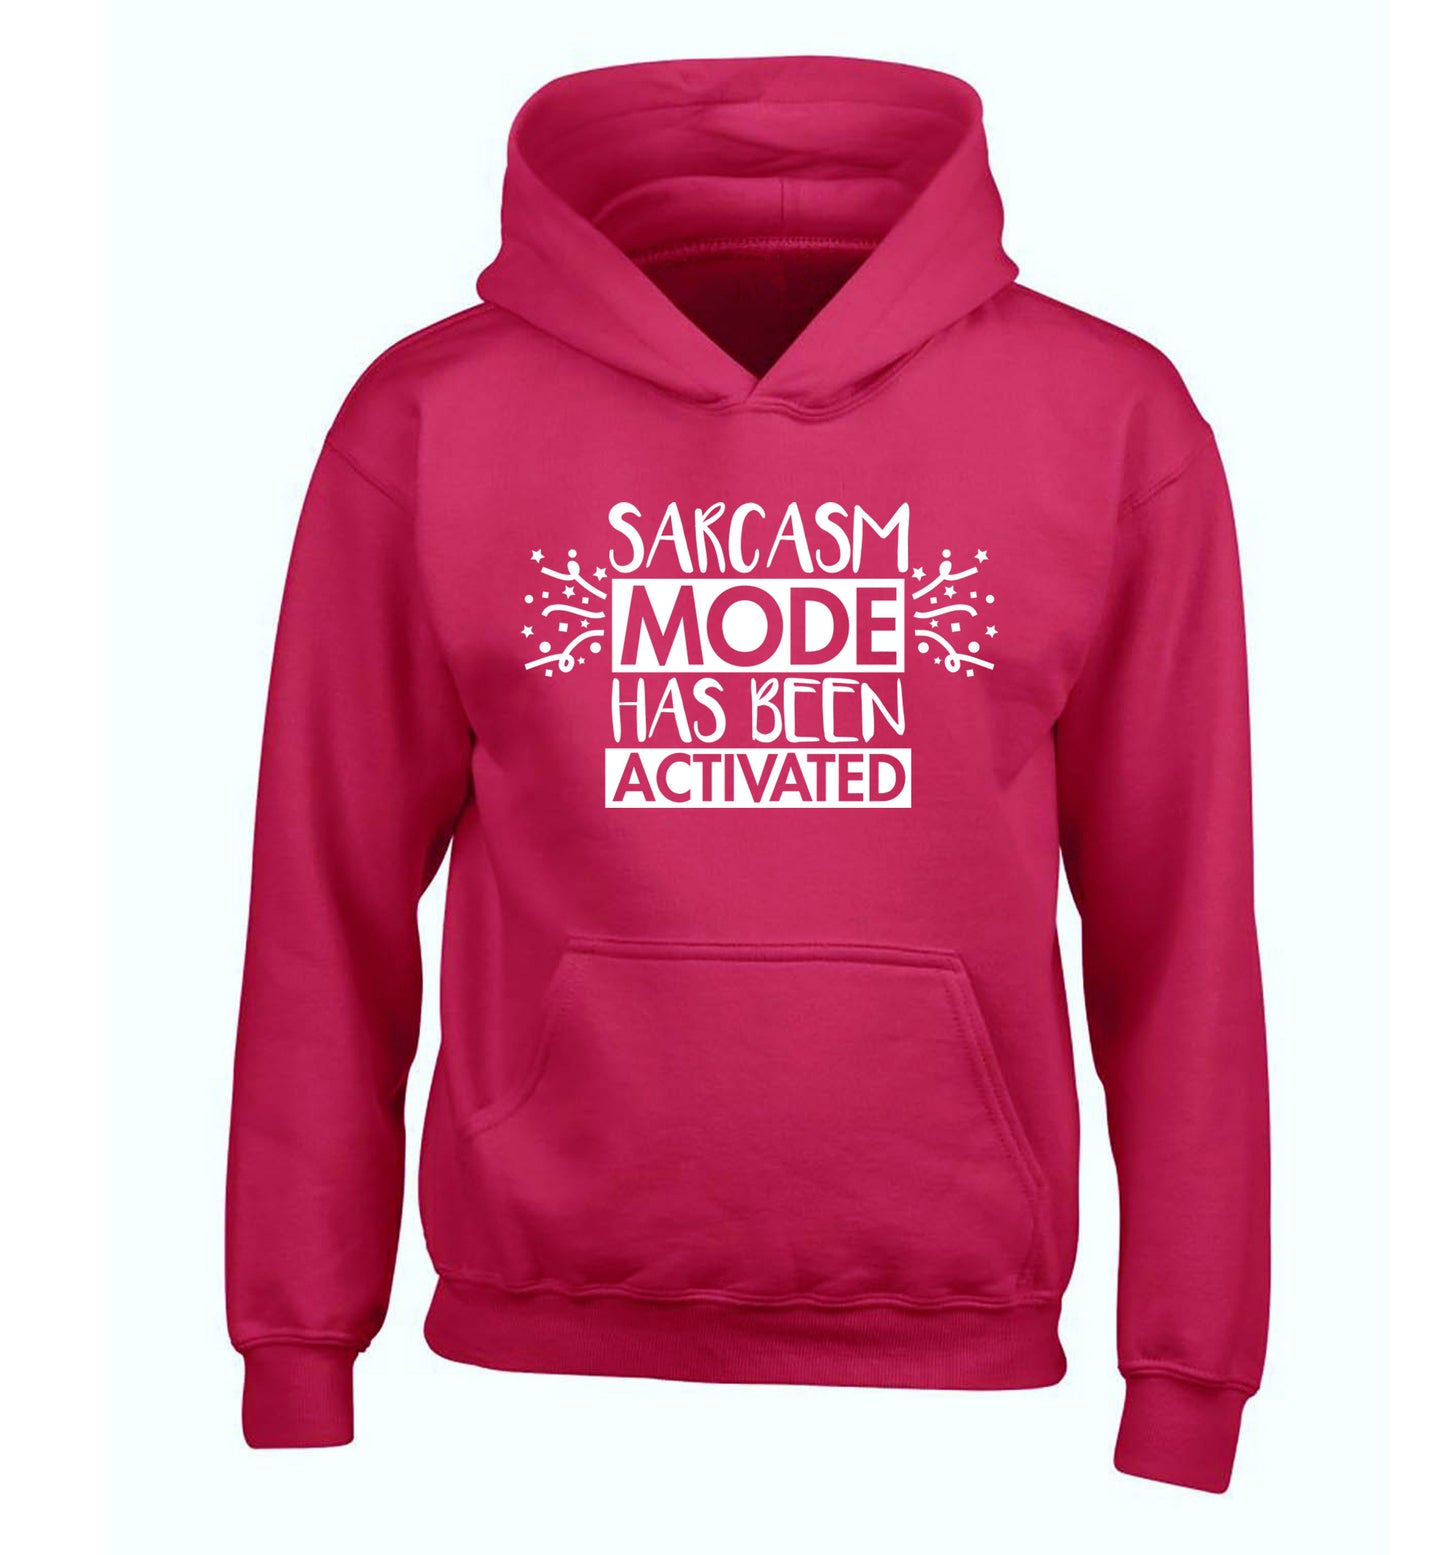 Sarcarsm mode has been activated children's pink hoodie 12-14 Years